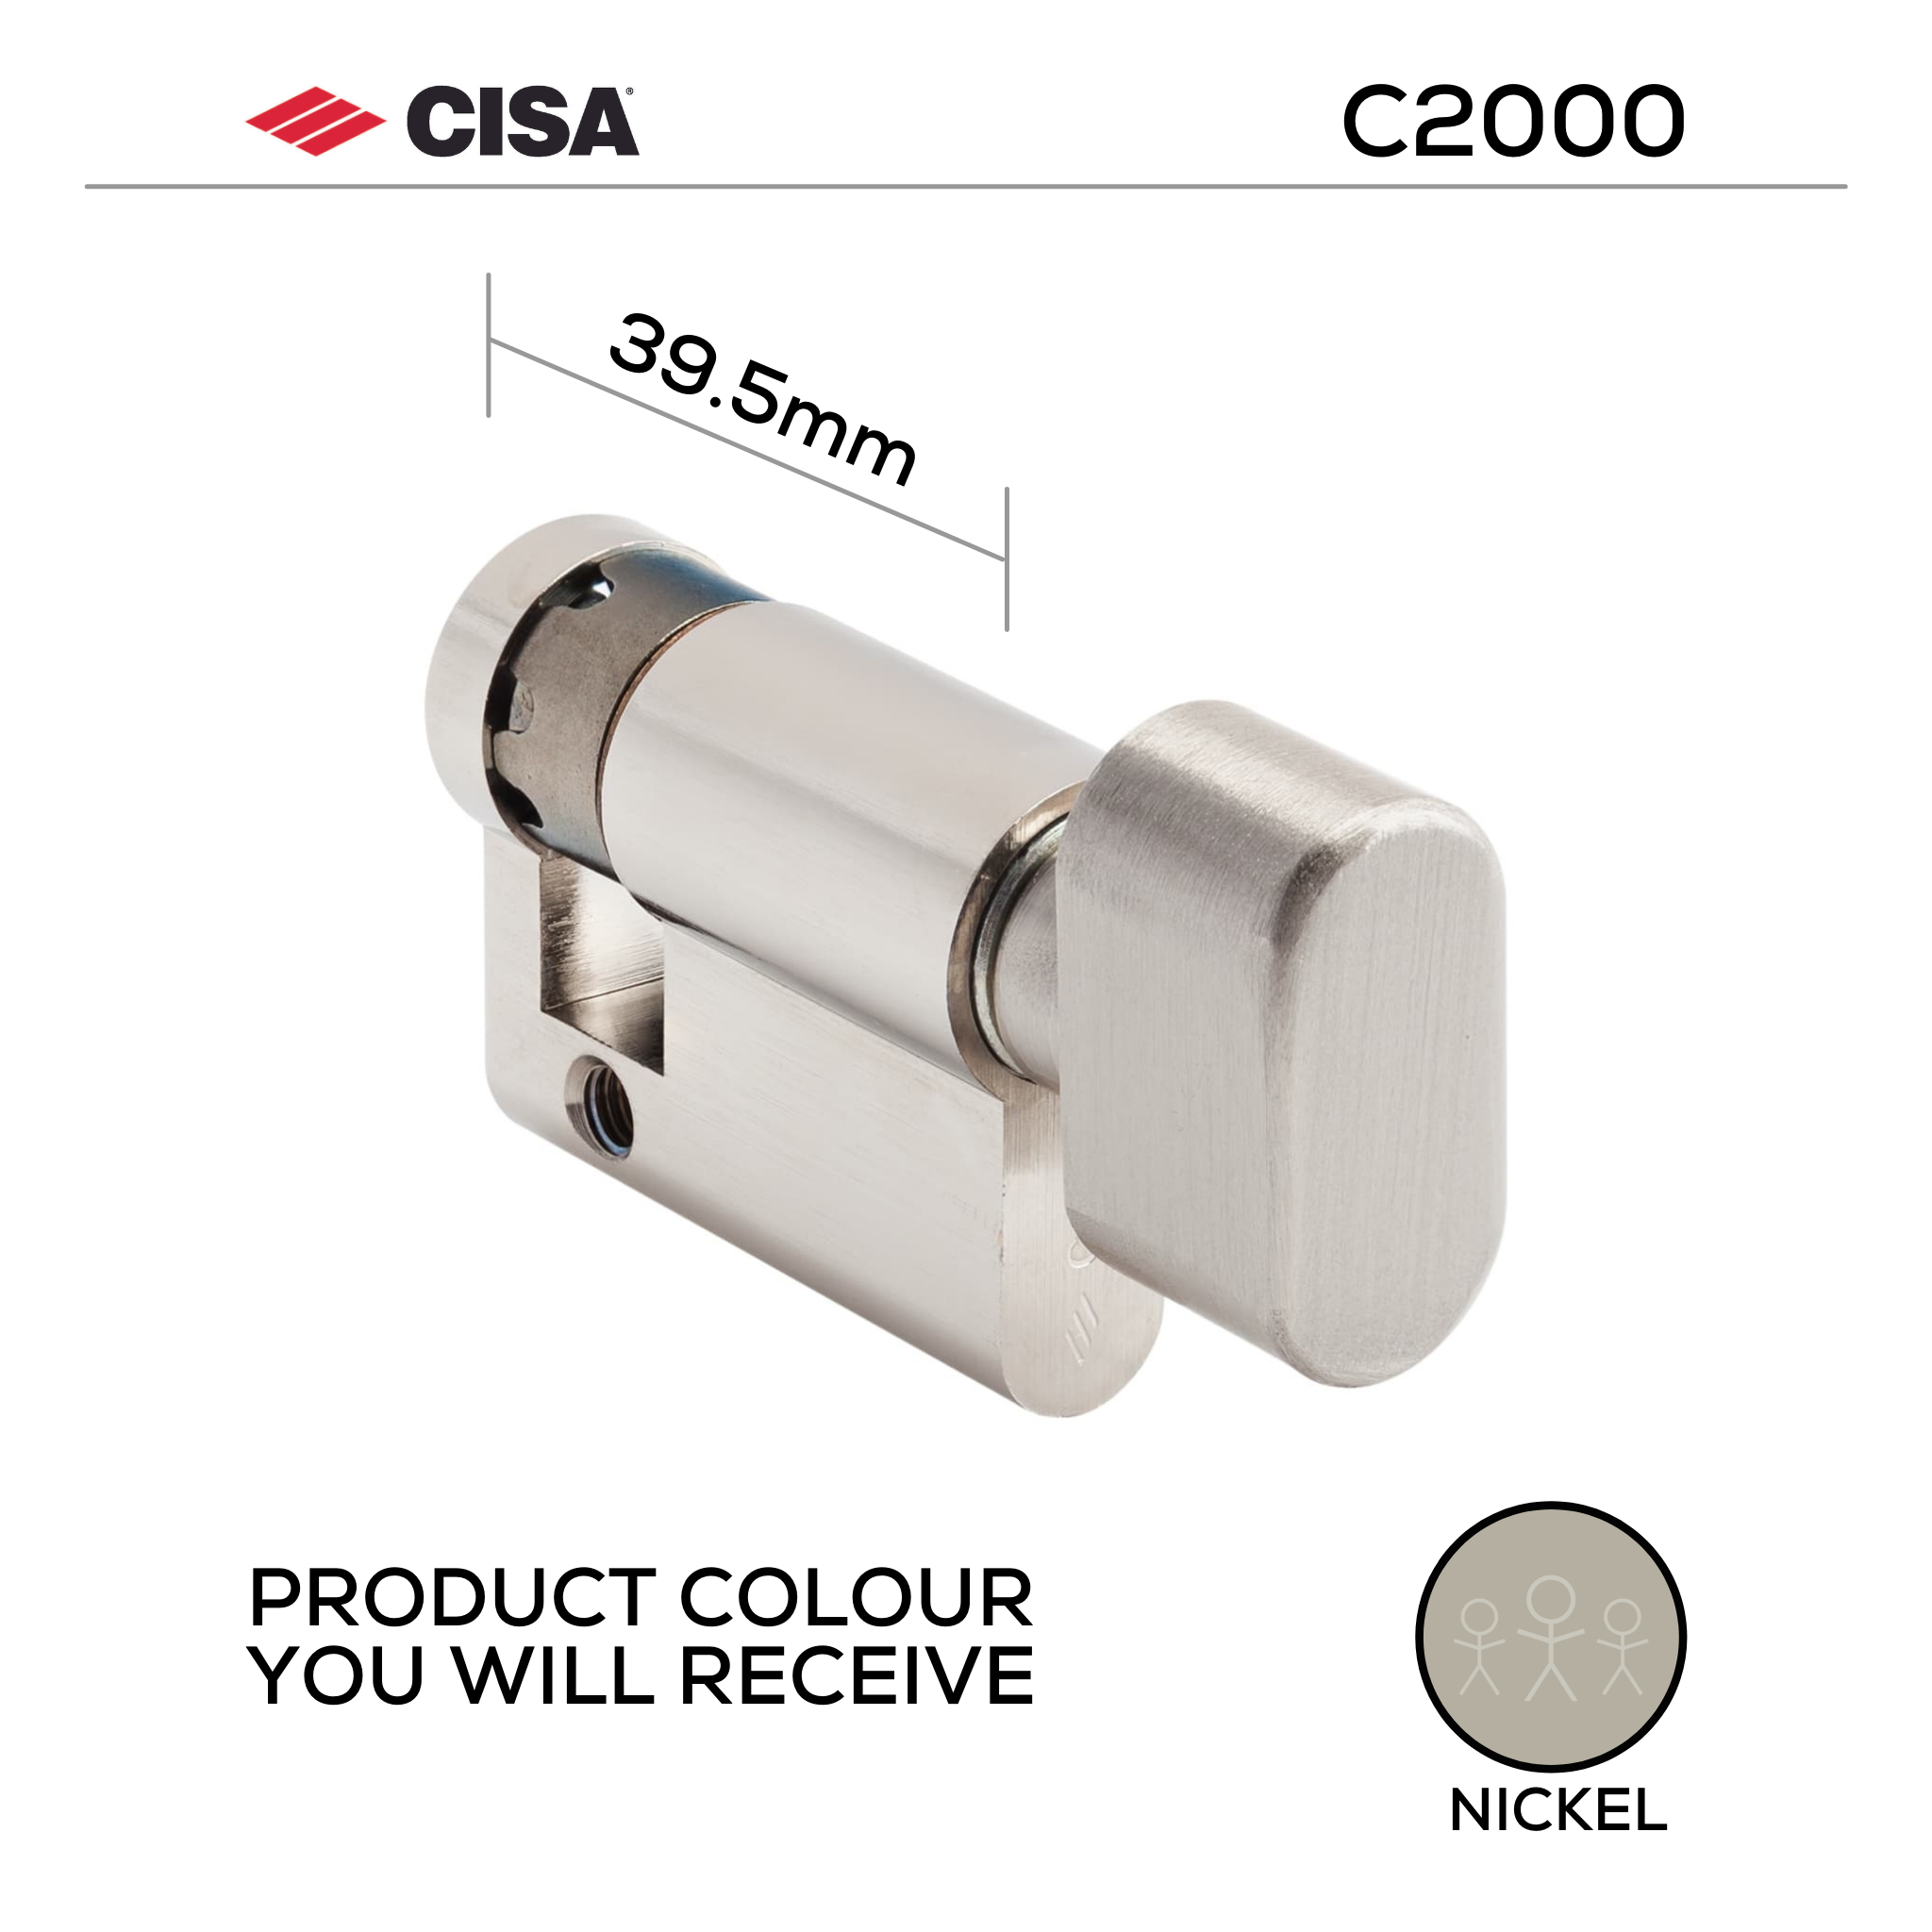 08559-04-12-KD, 39,5mm - 29.5/10, Half (Single Cylinder), C2000, Thumbturn, Keyed to Differ (Standard), Nickel, CISA